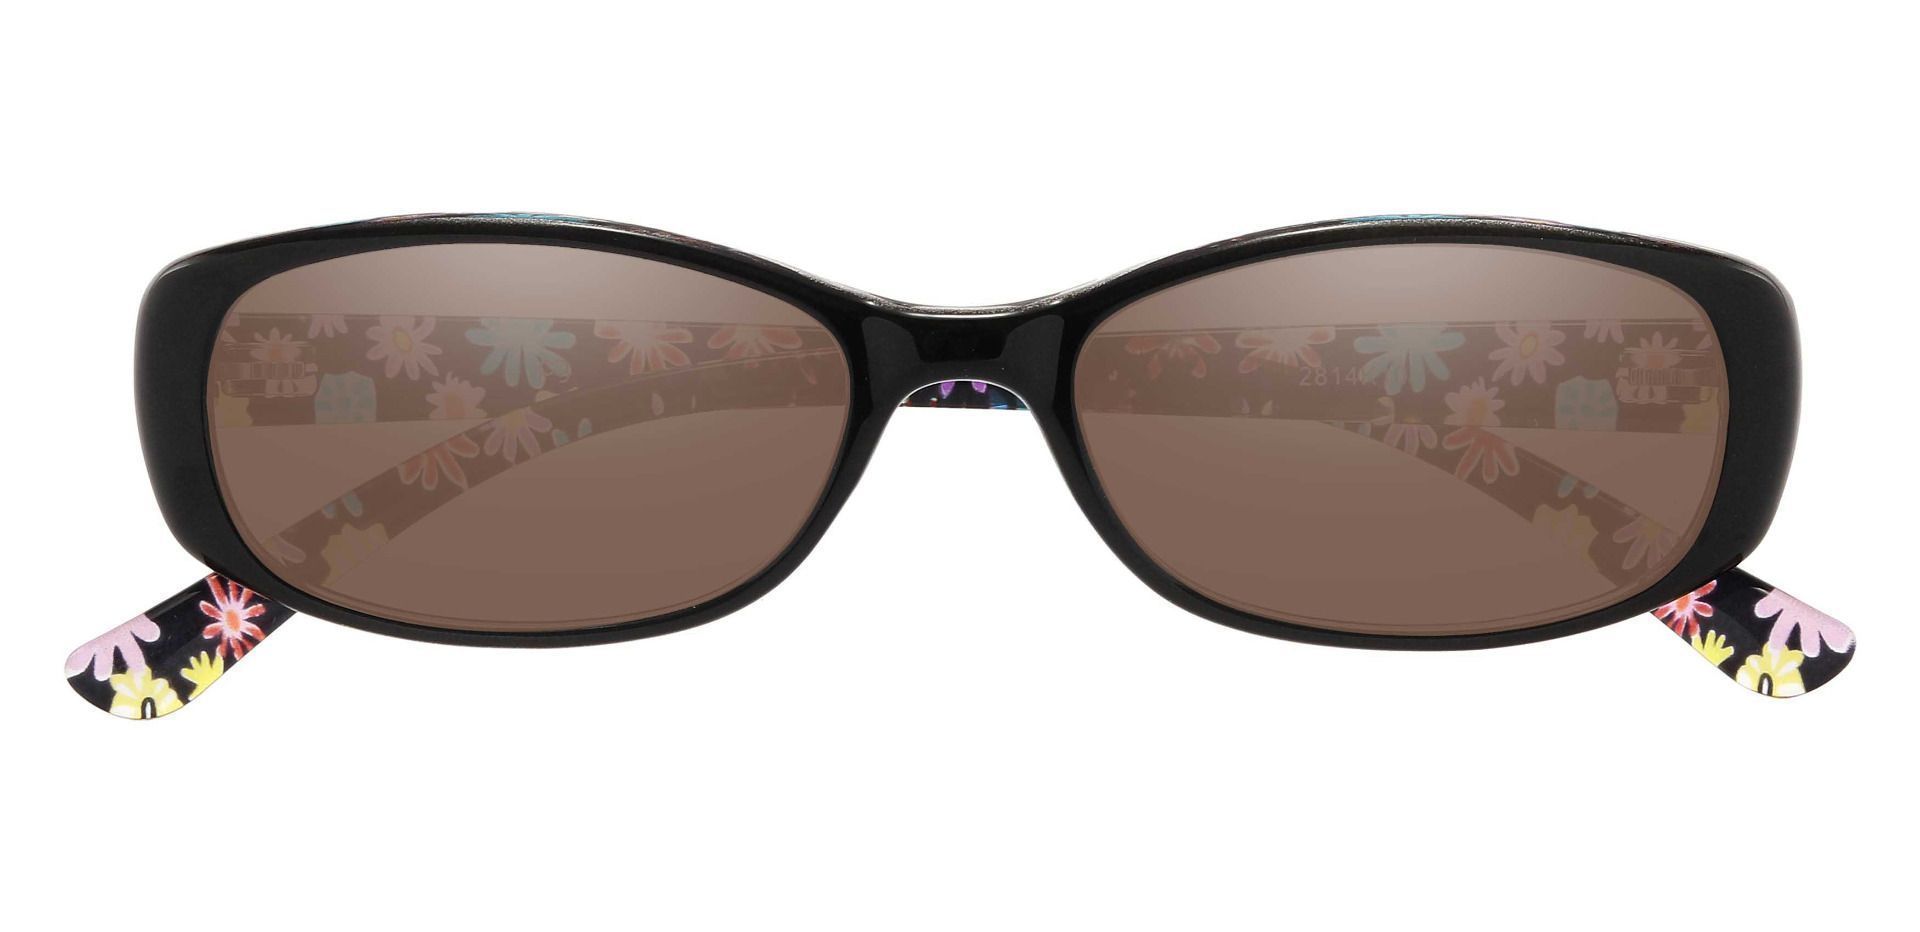 Bethesda Rectangle Prescription Sunglasses - Black Frame With Brown Lenses